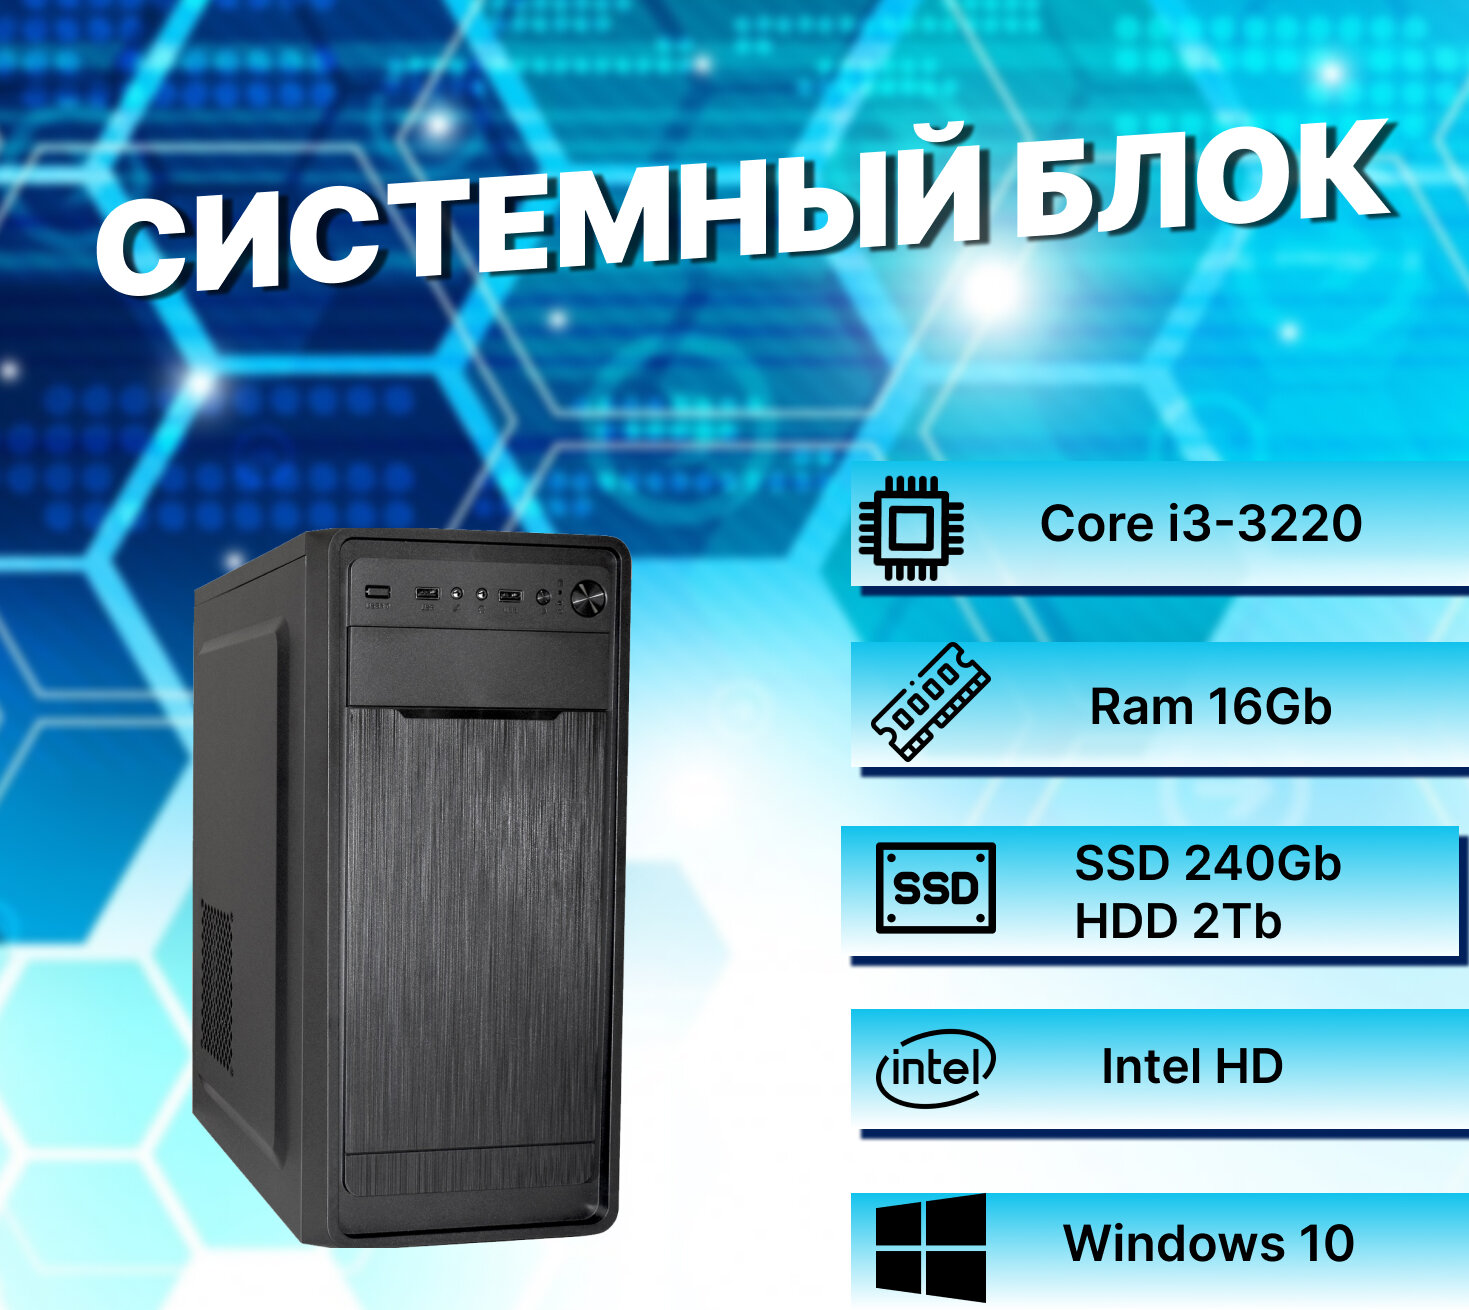 Системный блок Intel Core I3-3220 (3.4ГГц)/ RAM 16Gb/ SSD 240Gb/ HDD 2Tb/ Intel HD/ Windows 10 Pro